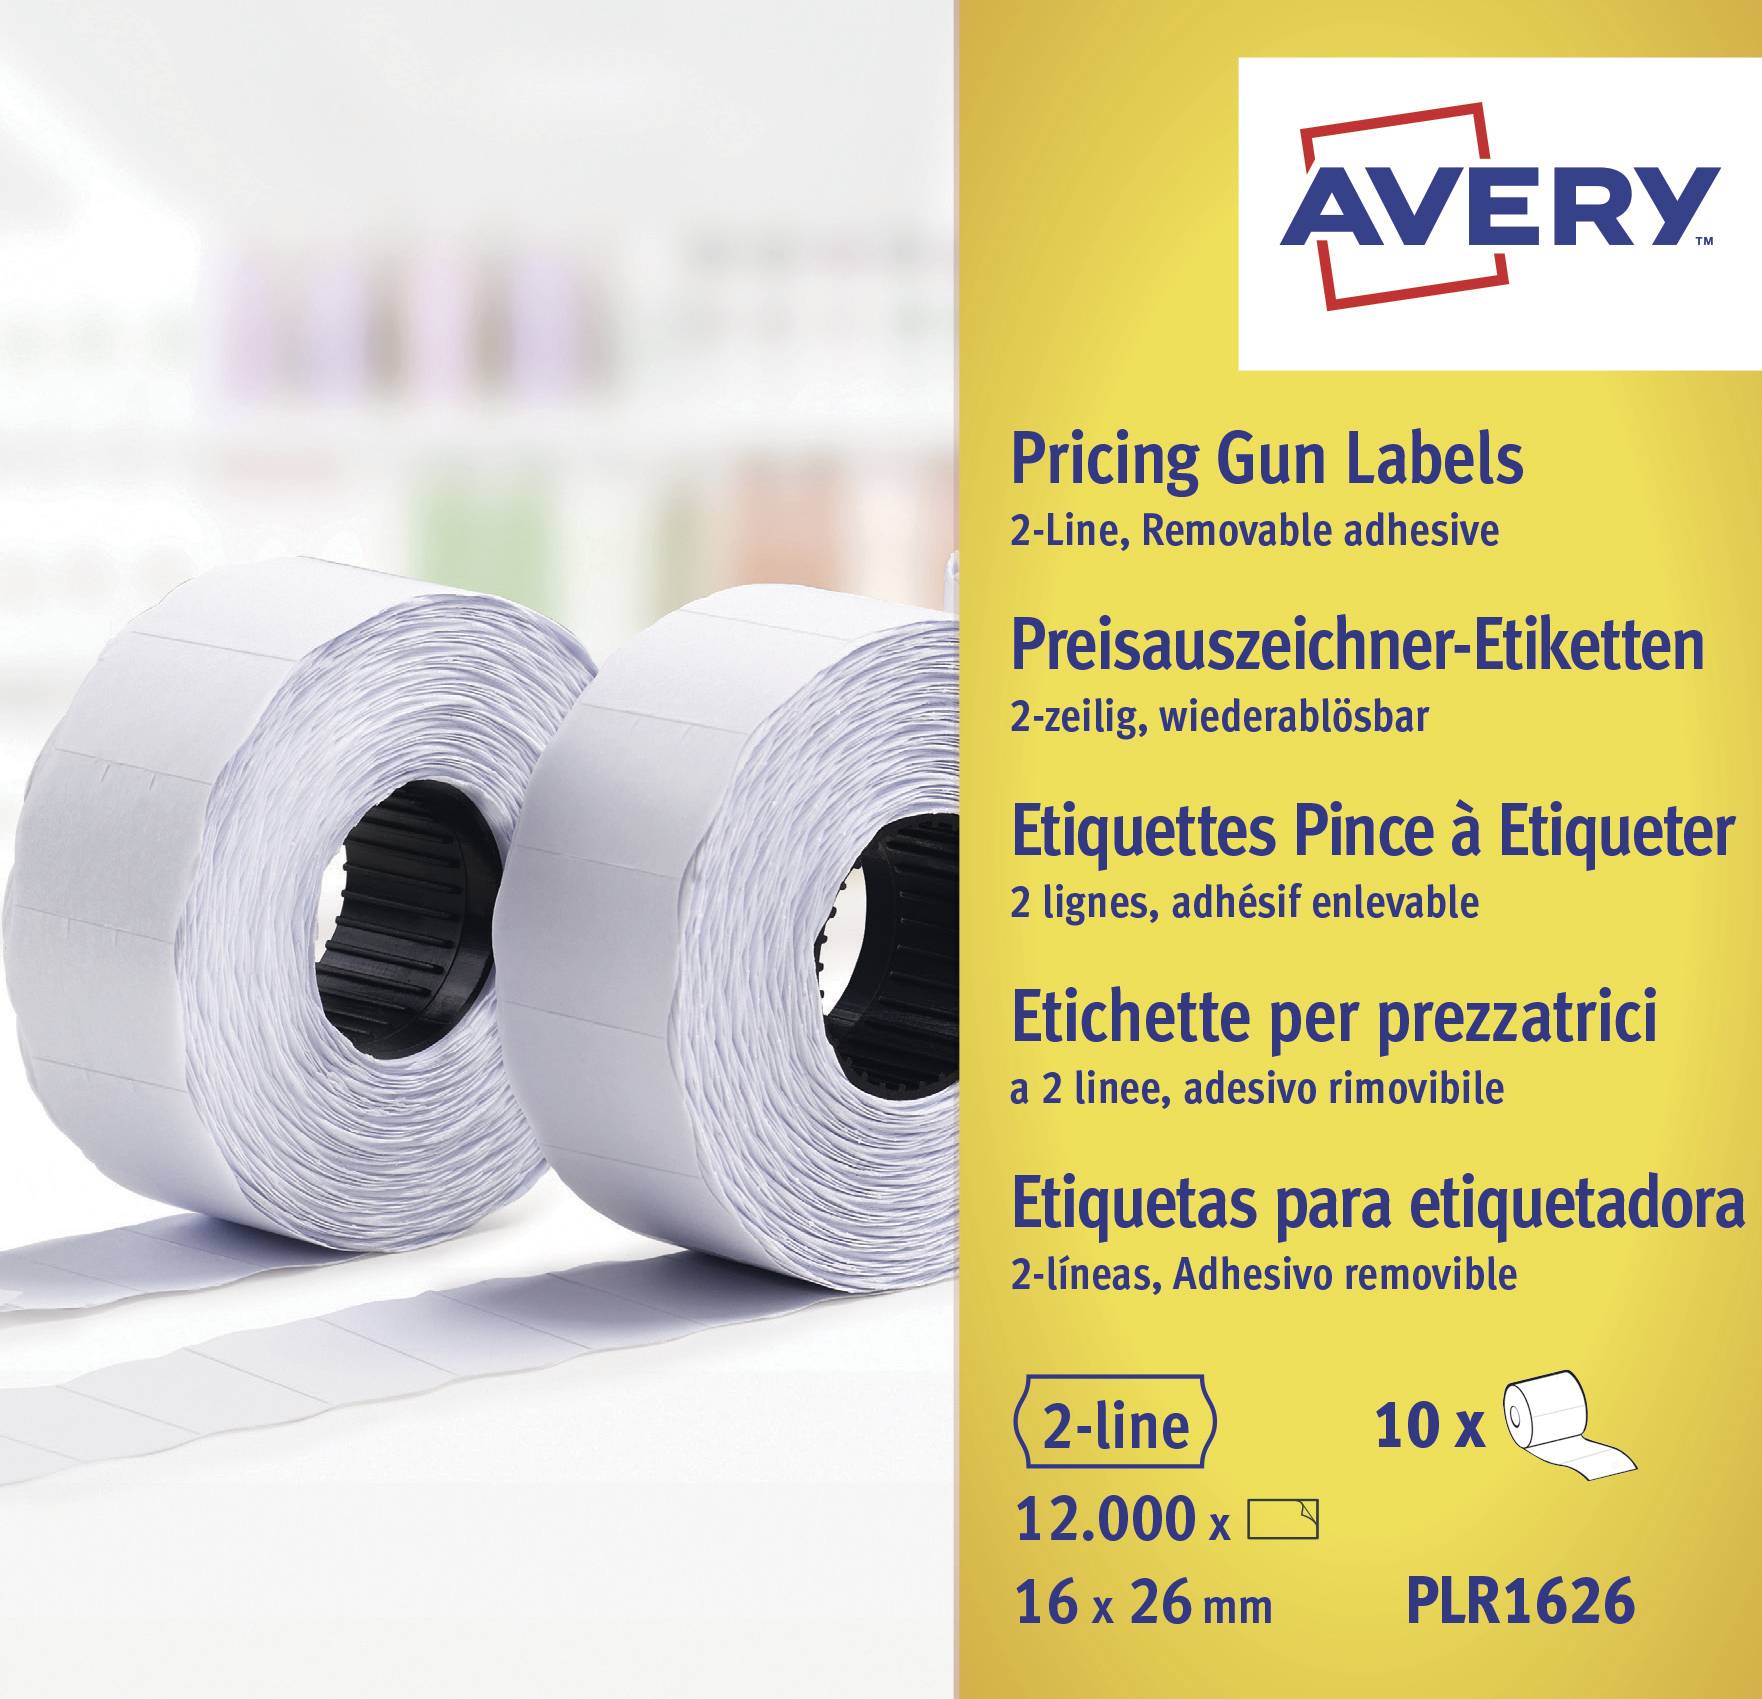 ZWECKFORM Avery-Etiketten (Rolle) 26 mm x 16 mm Papier Weiß 12000 St. Wiederablösbar PLR1626 Preis-E